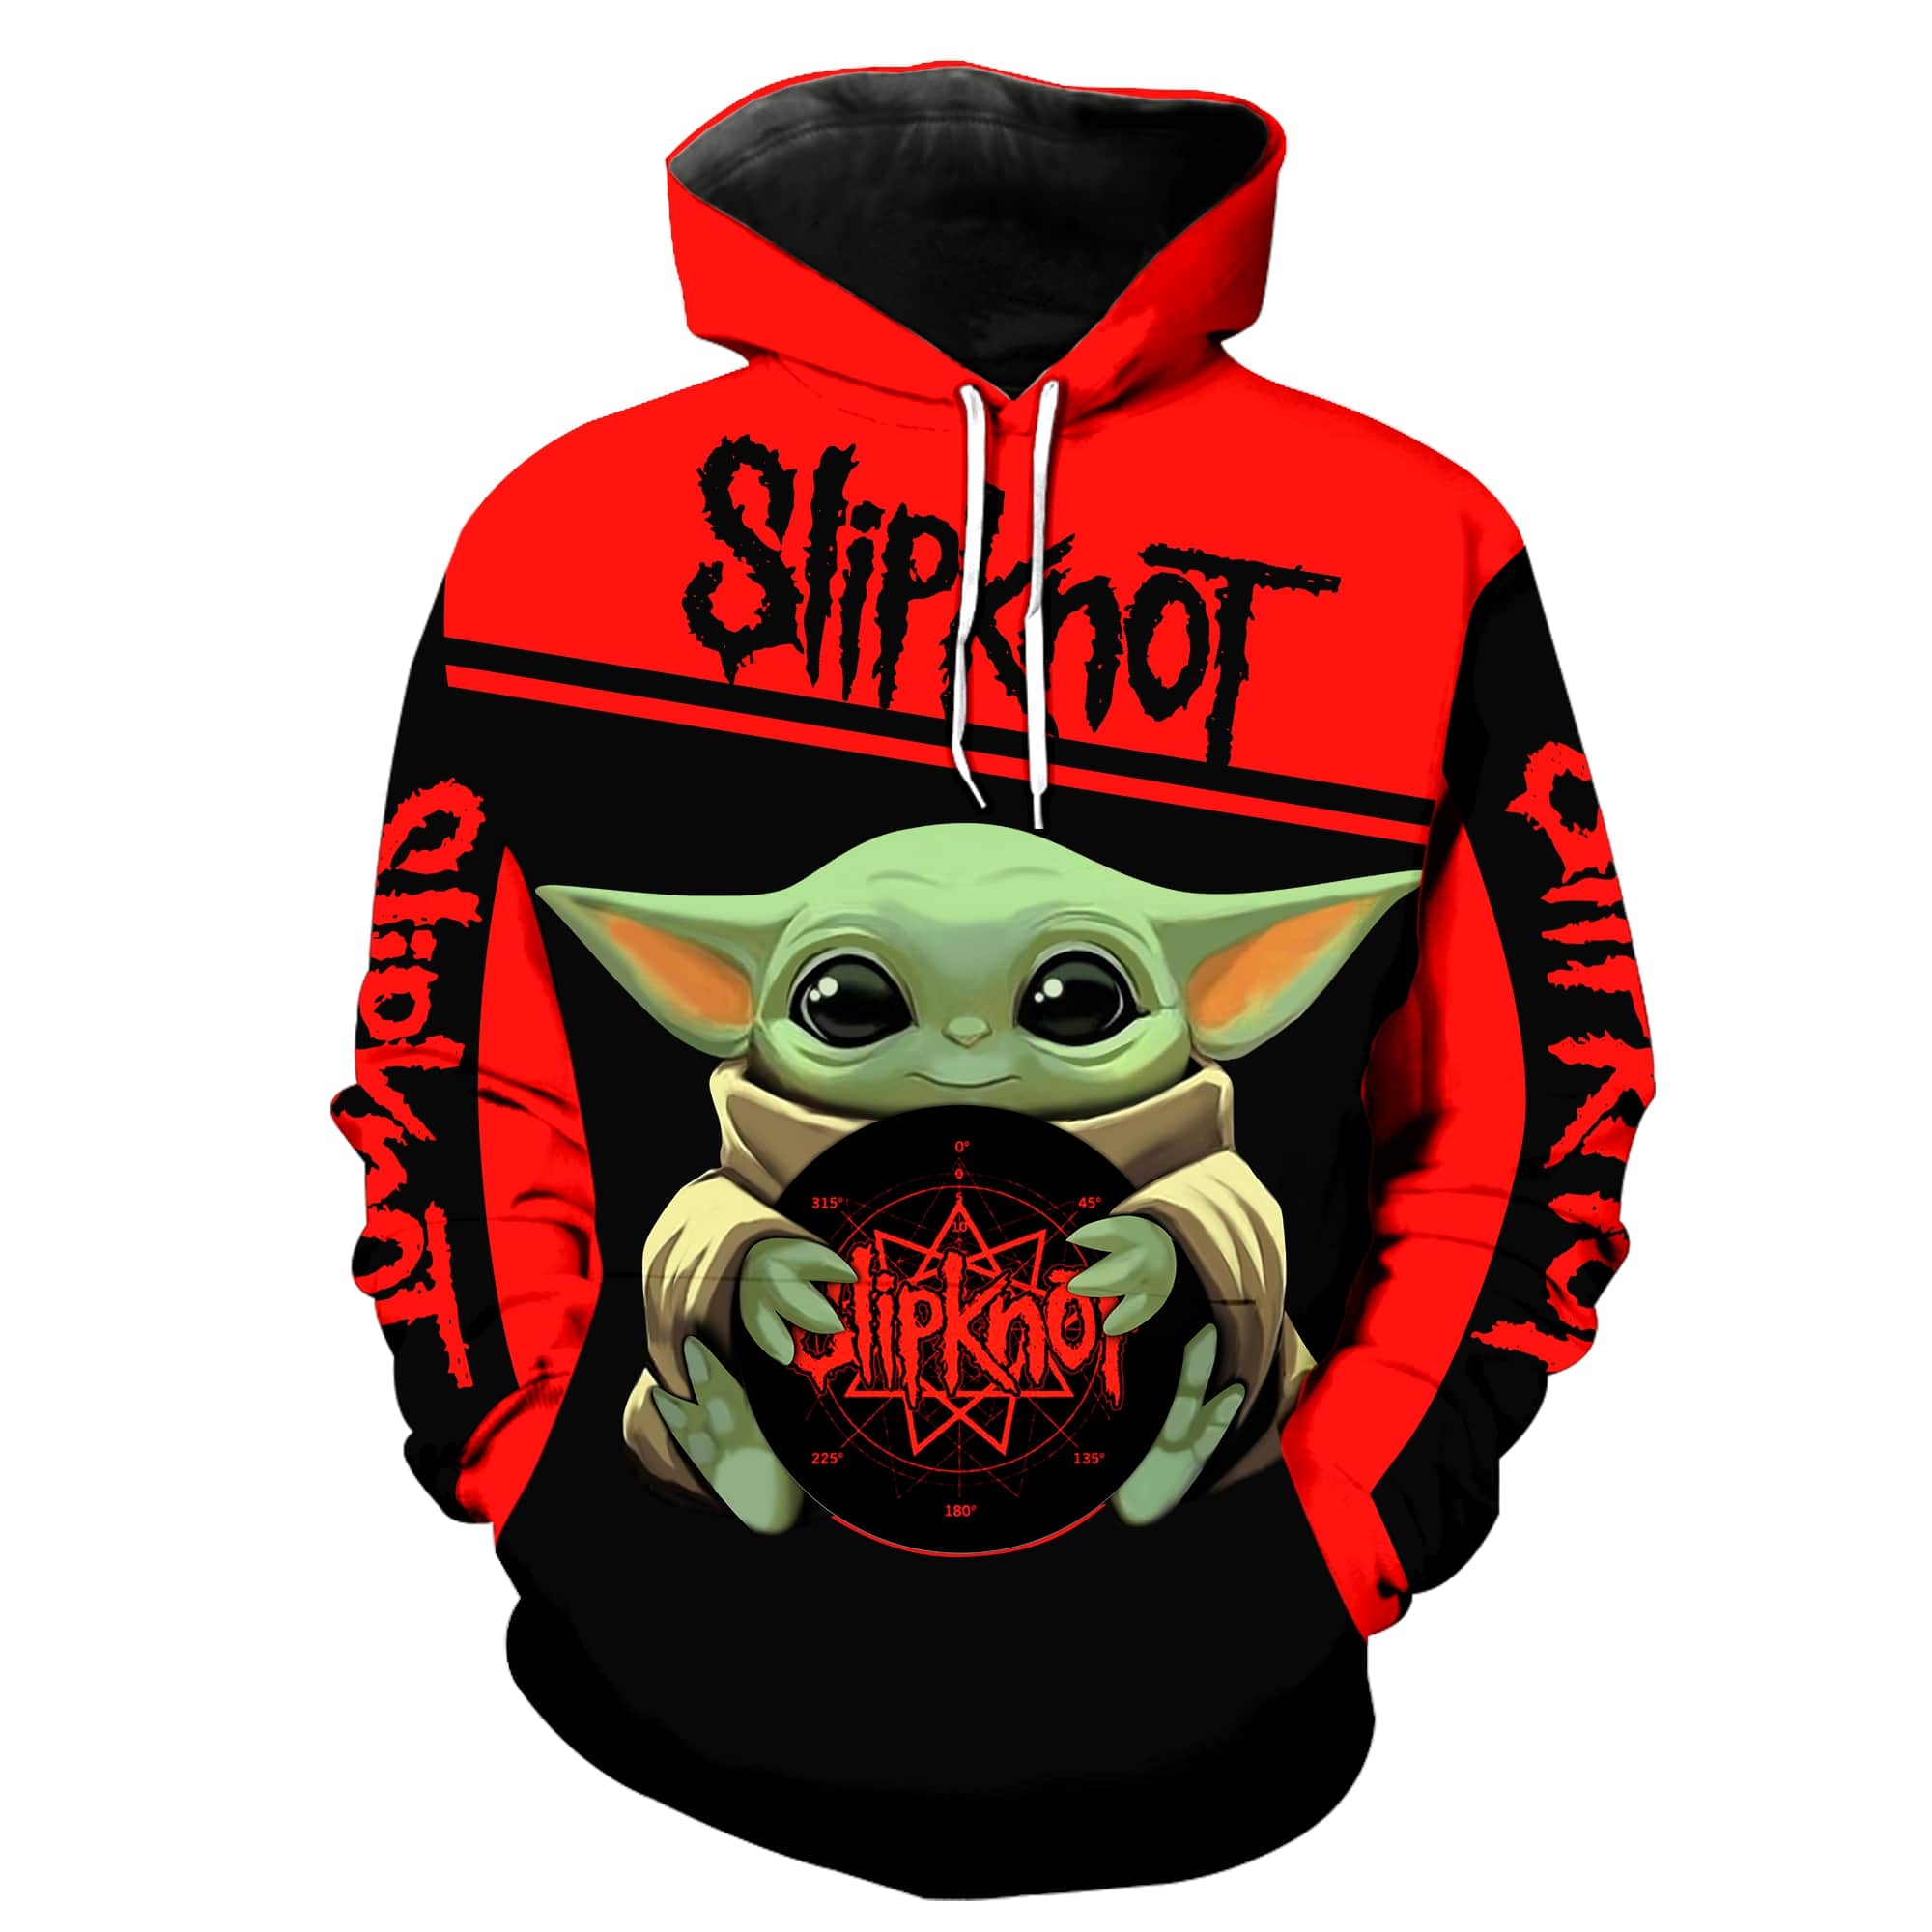 Baby yoda slipknot all over printed hoodie